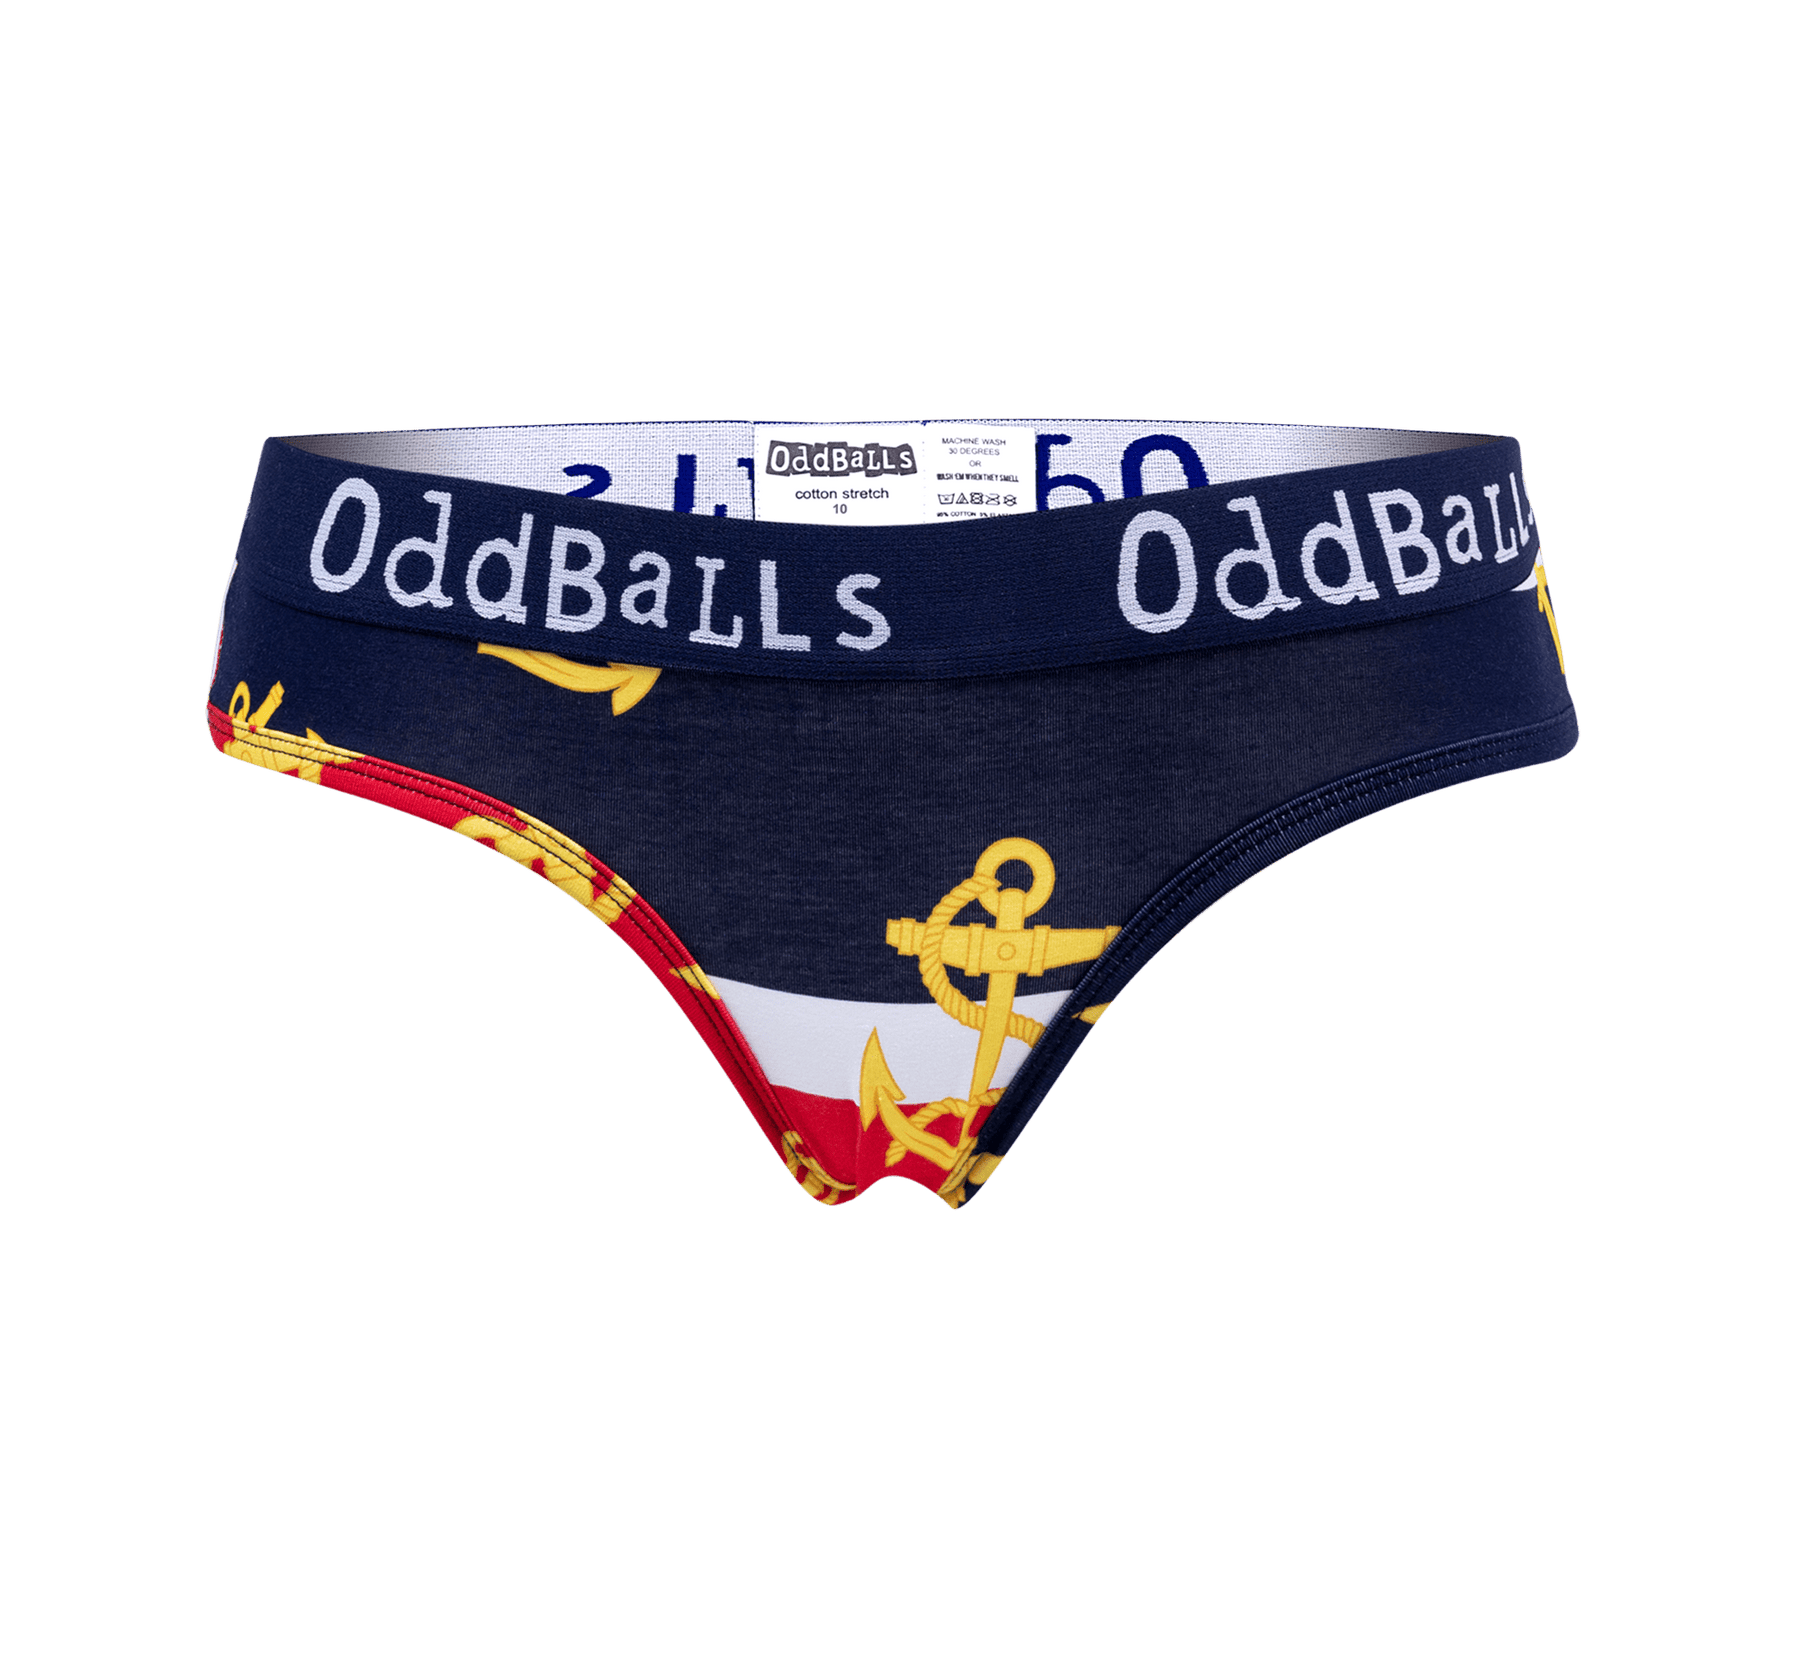 OddBalls - Ladies Briefs Subscription